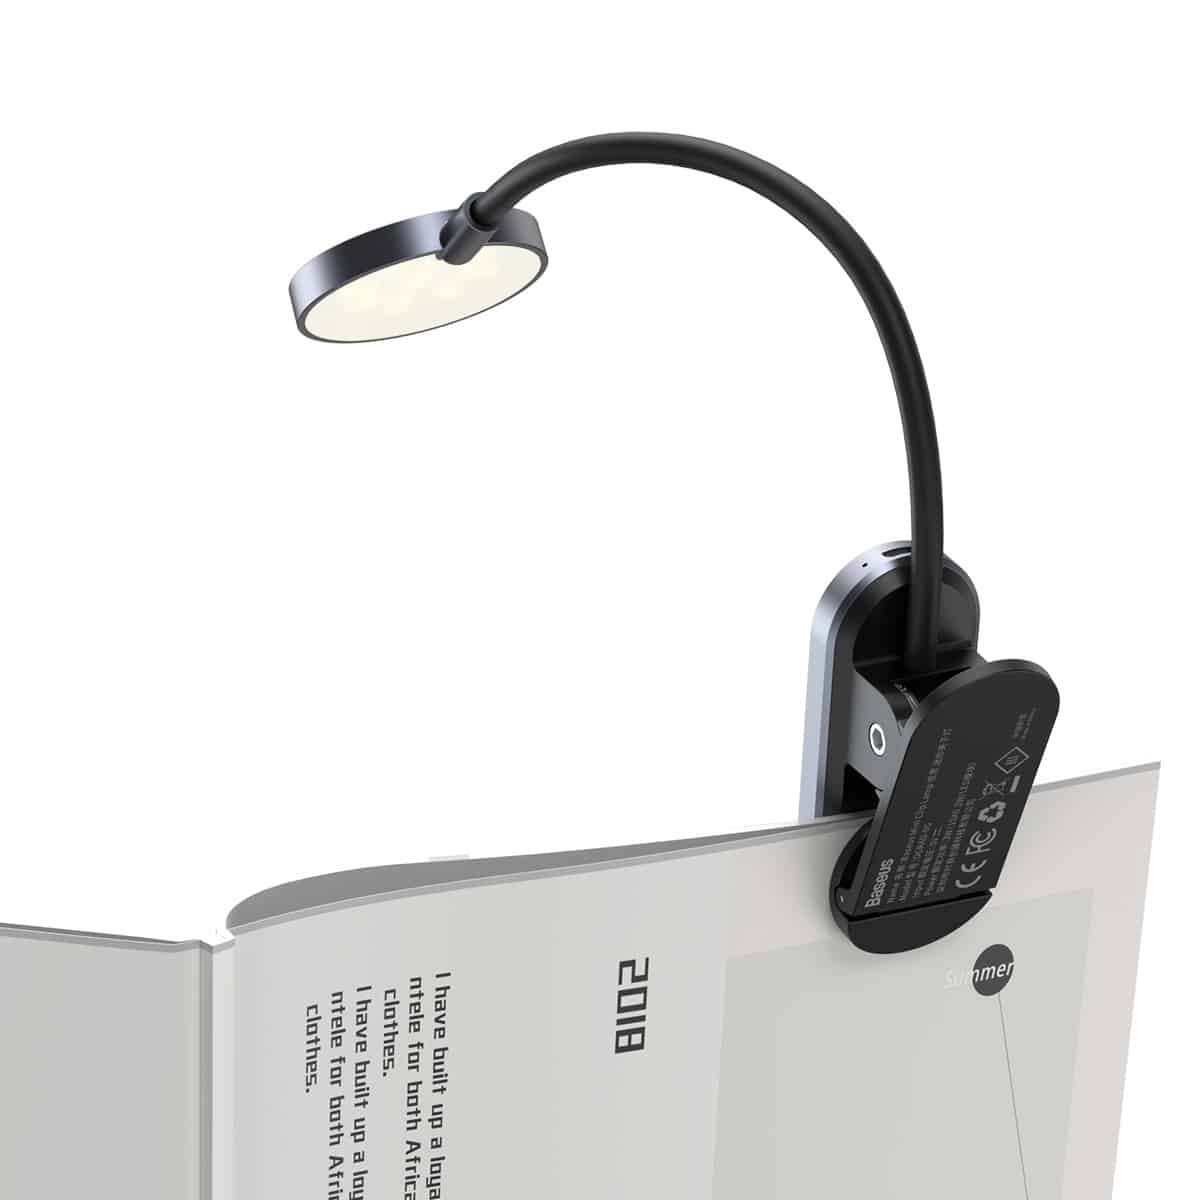 Baseus Comfort Reading Mini Clip Lamp